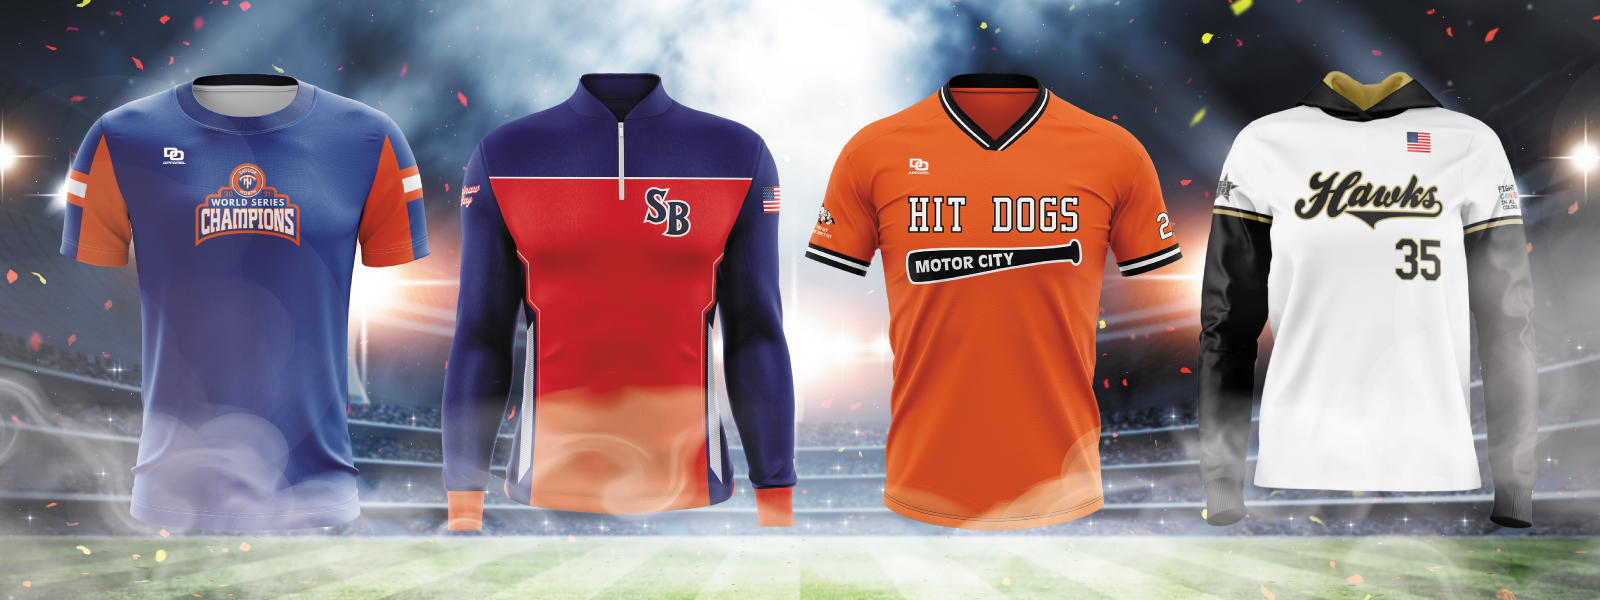 MLB Merchandise Jersey, MLB Merchandise Baseball Jerseys, Uniforms